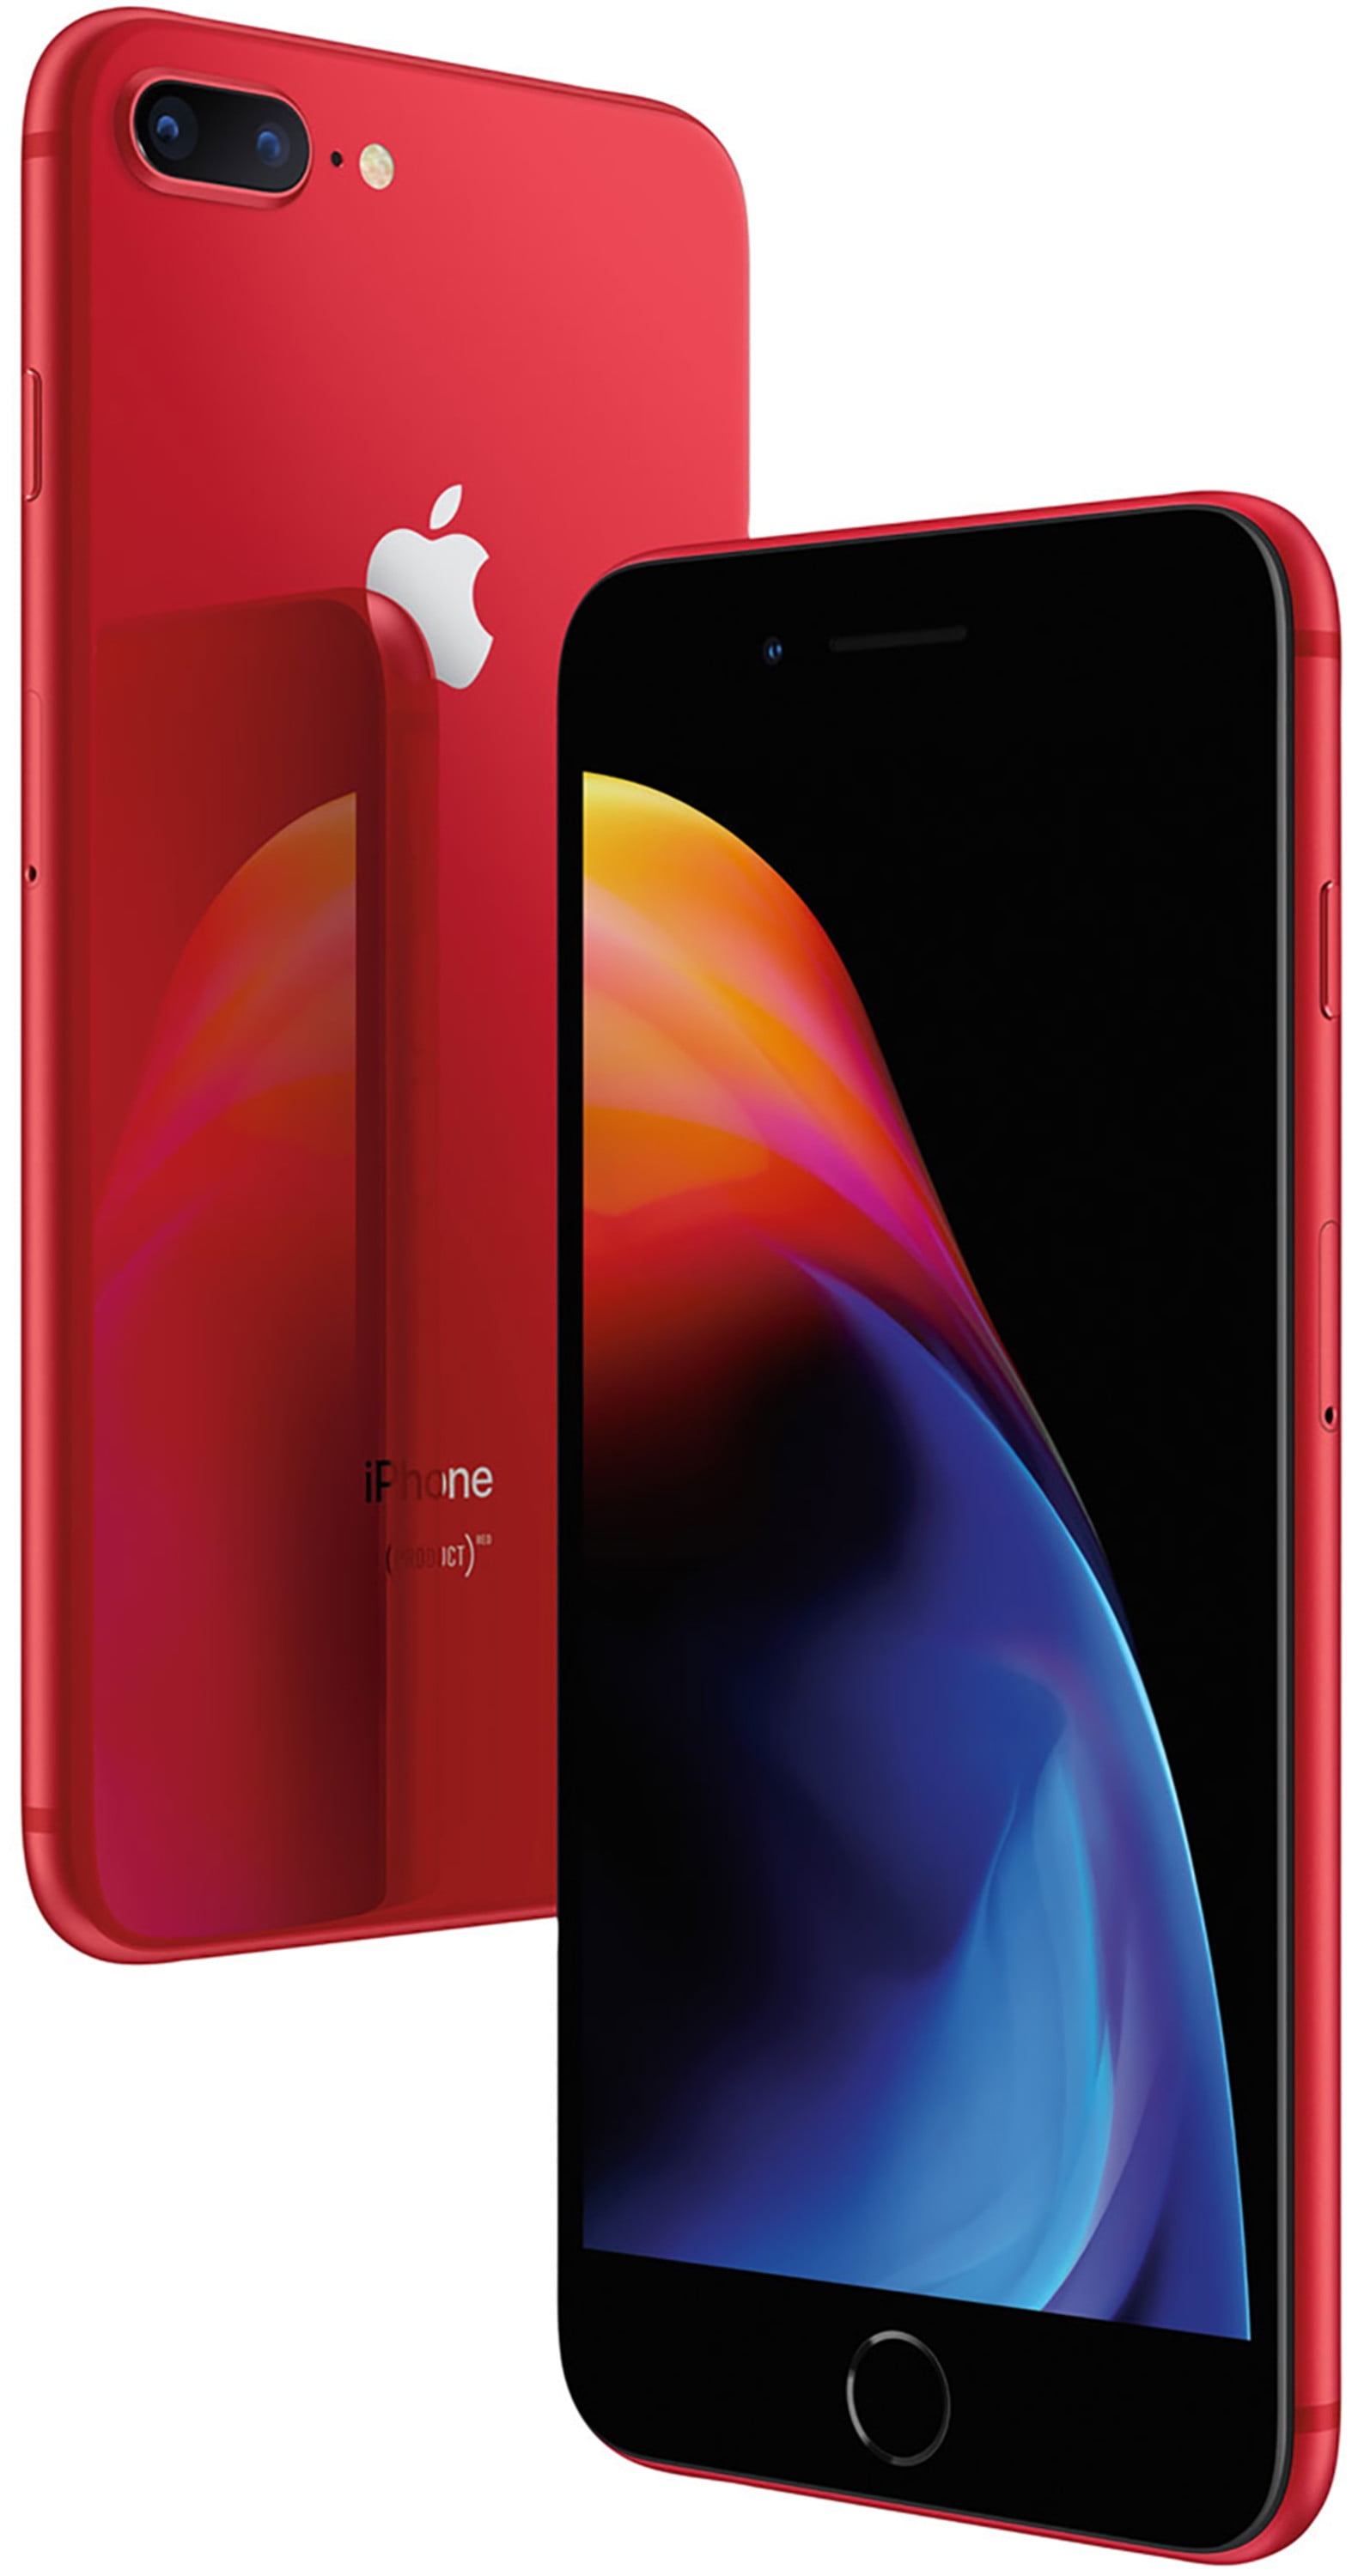 Apple iPhone 8 Plus 64GB Unlocked GSM 4G LTE Phone - Red (Fair Cosmetics,  Fully Functional) + LiquidNano Screen Protector